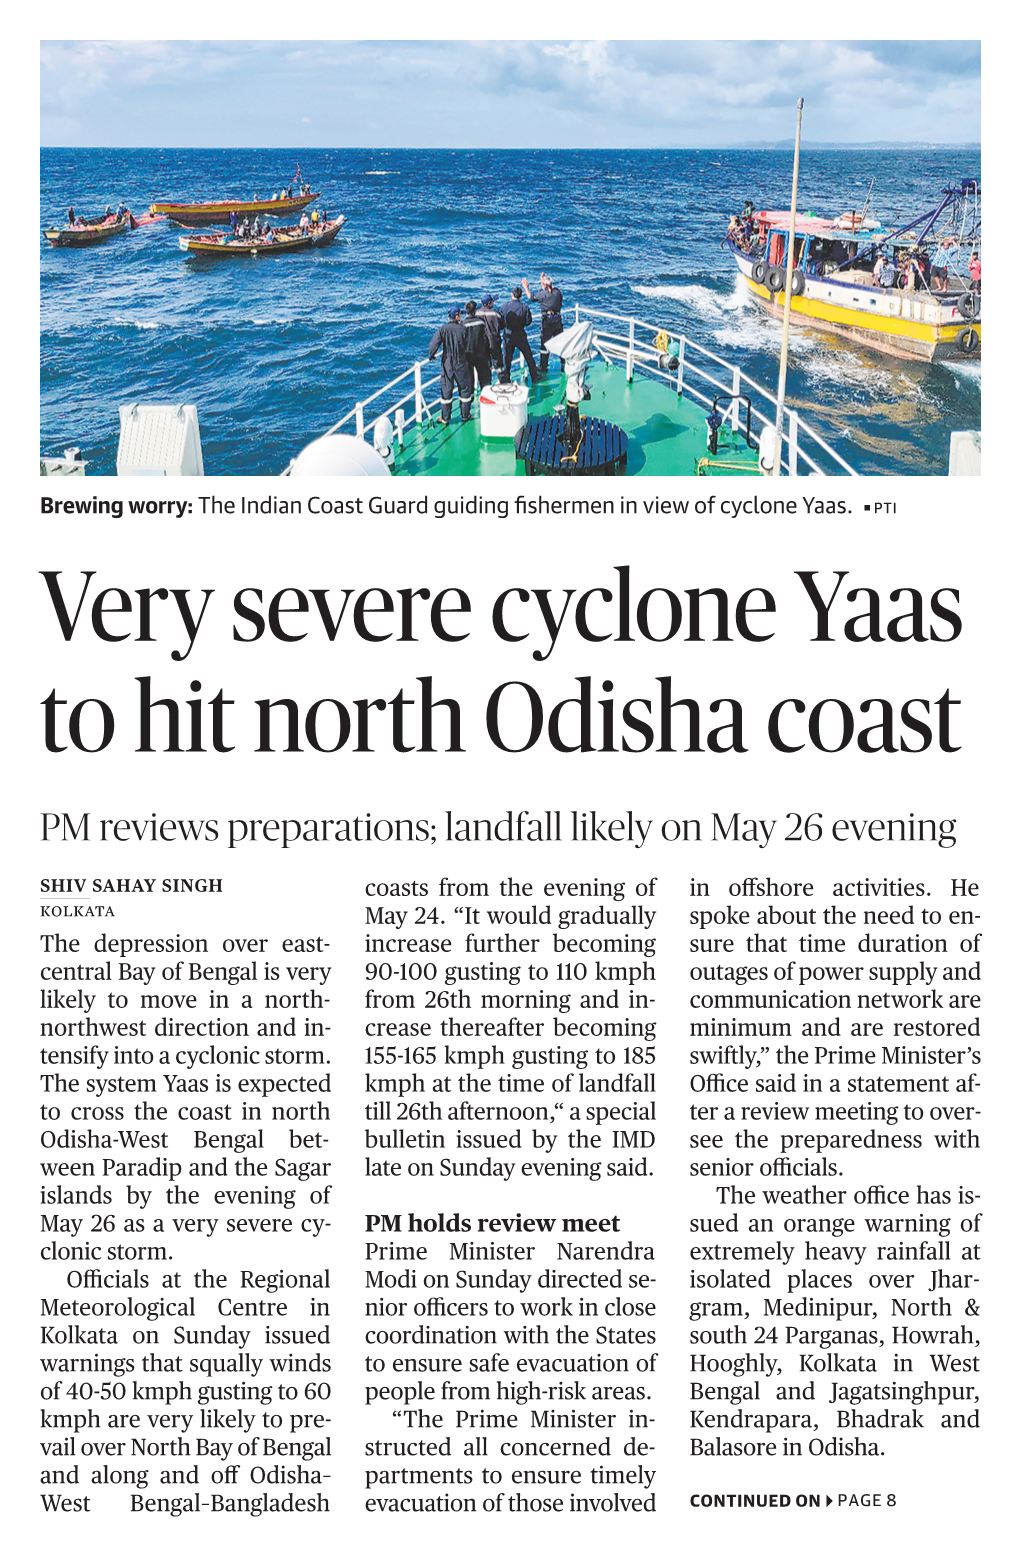 Very Severe Cyclone Yaas to Hit North Odisha Coast